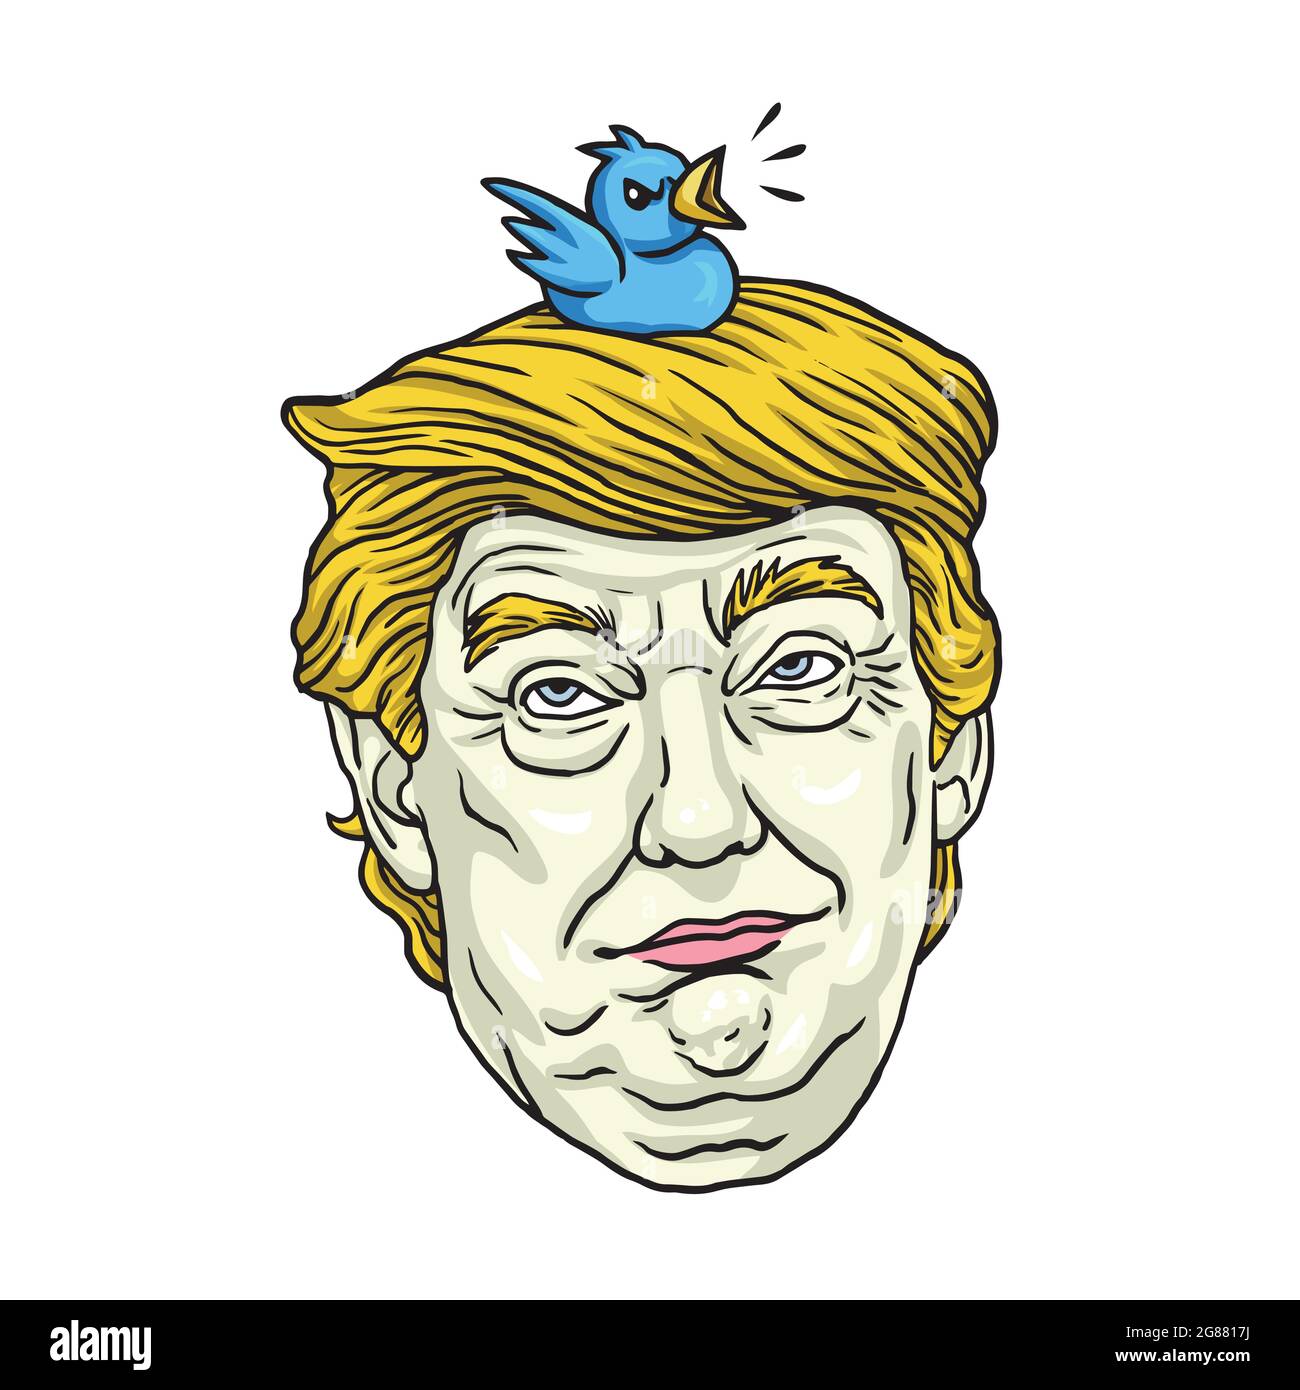 Donald Trump with His Pet Twitter Bird. Cartoon Caricature Portrait Illustration Vector Stock Vector